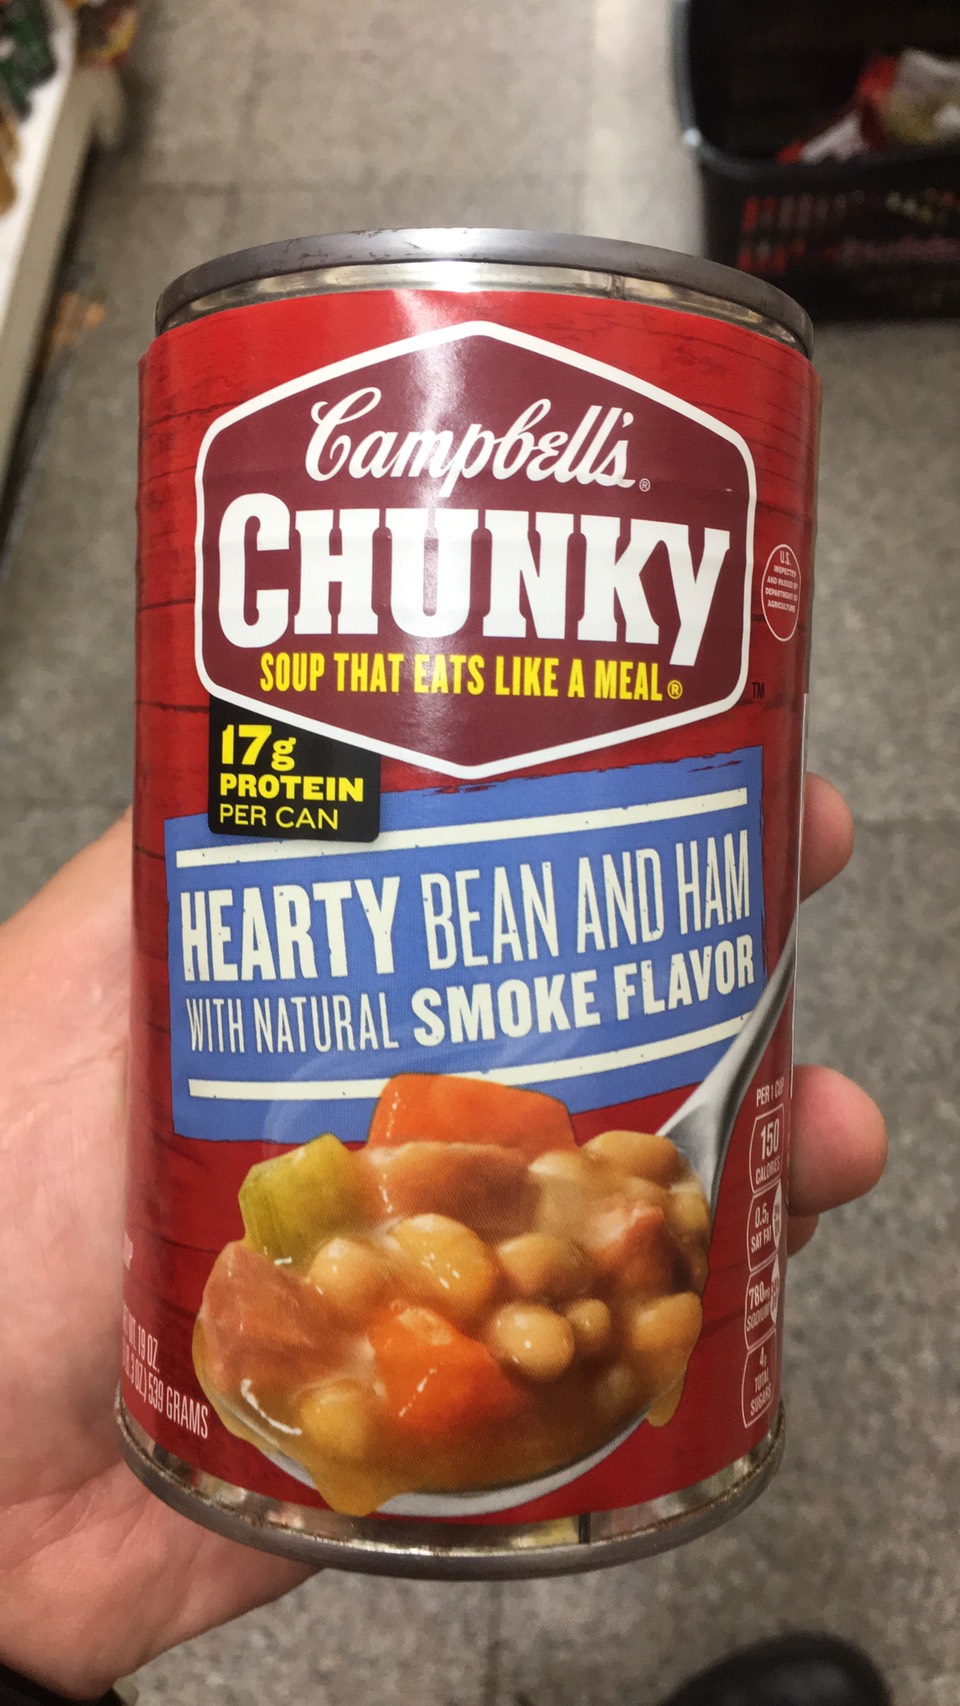 campbell's chunky hearty bean and ham with natural smoke flavor แคมเบลล์ ชังกี้ ซุปสำเร็จรูปผสมถั่วและแฮมรมควัน  539 กรัม